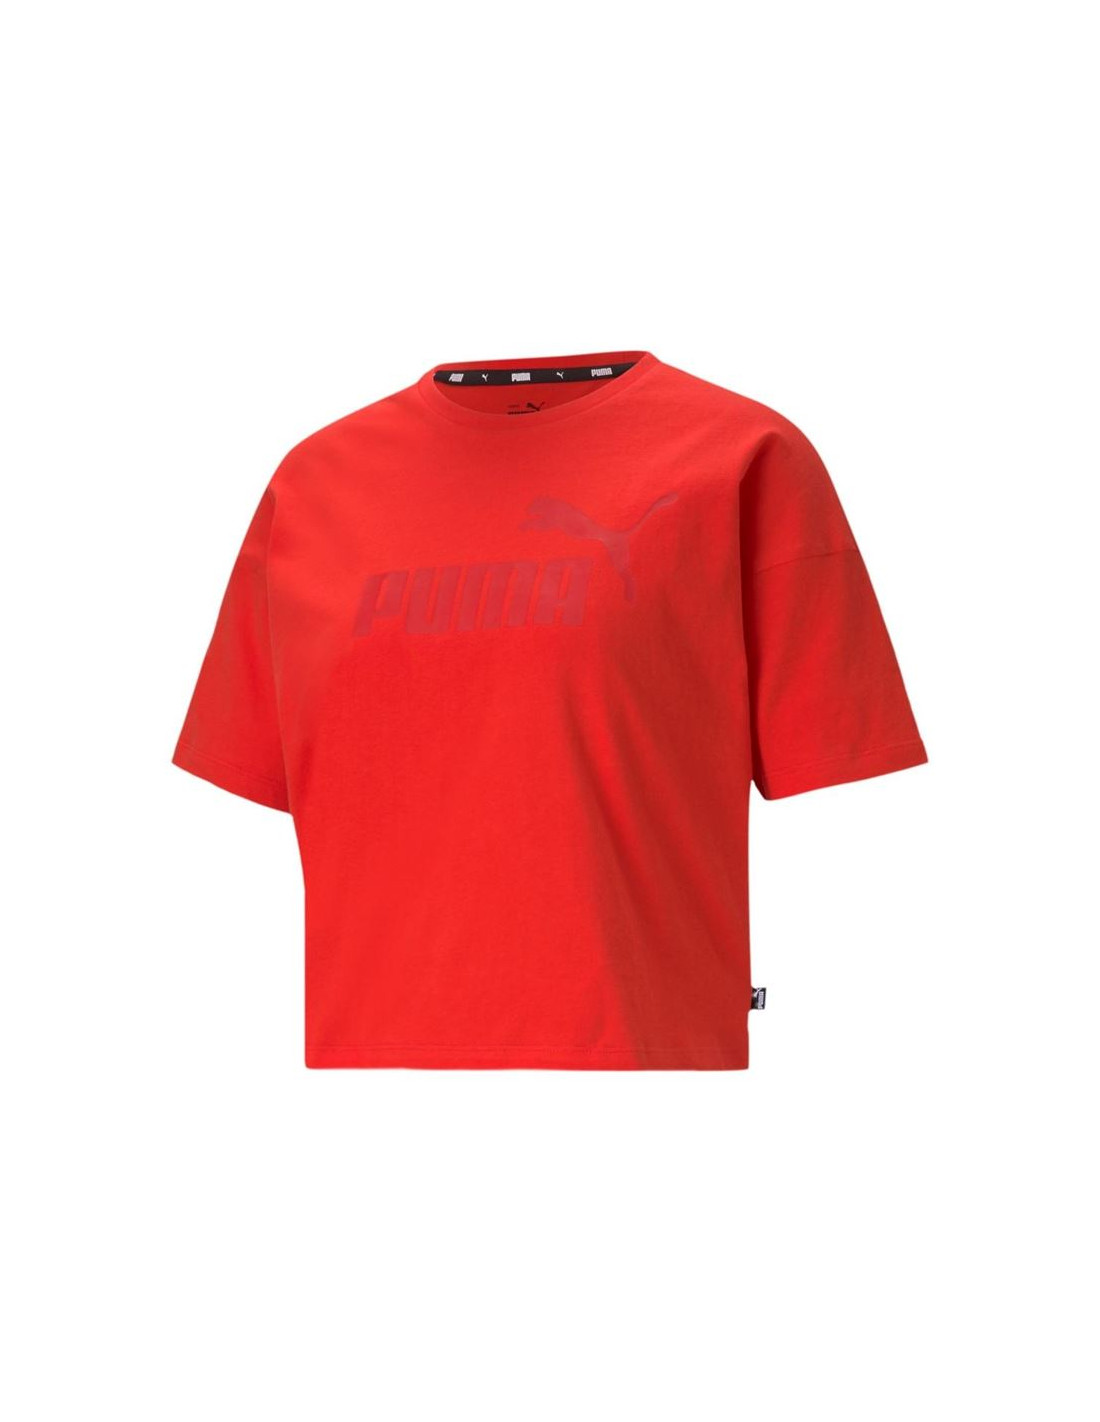 Camiseta sportswear puma essentials logo